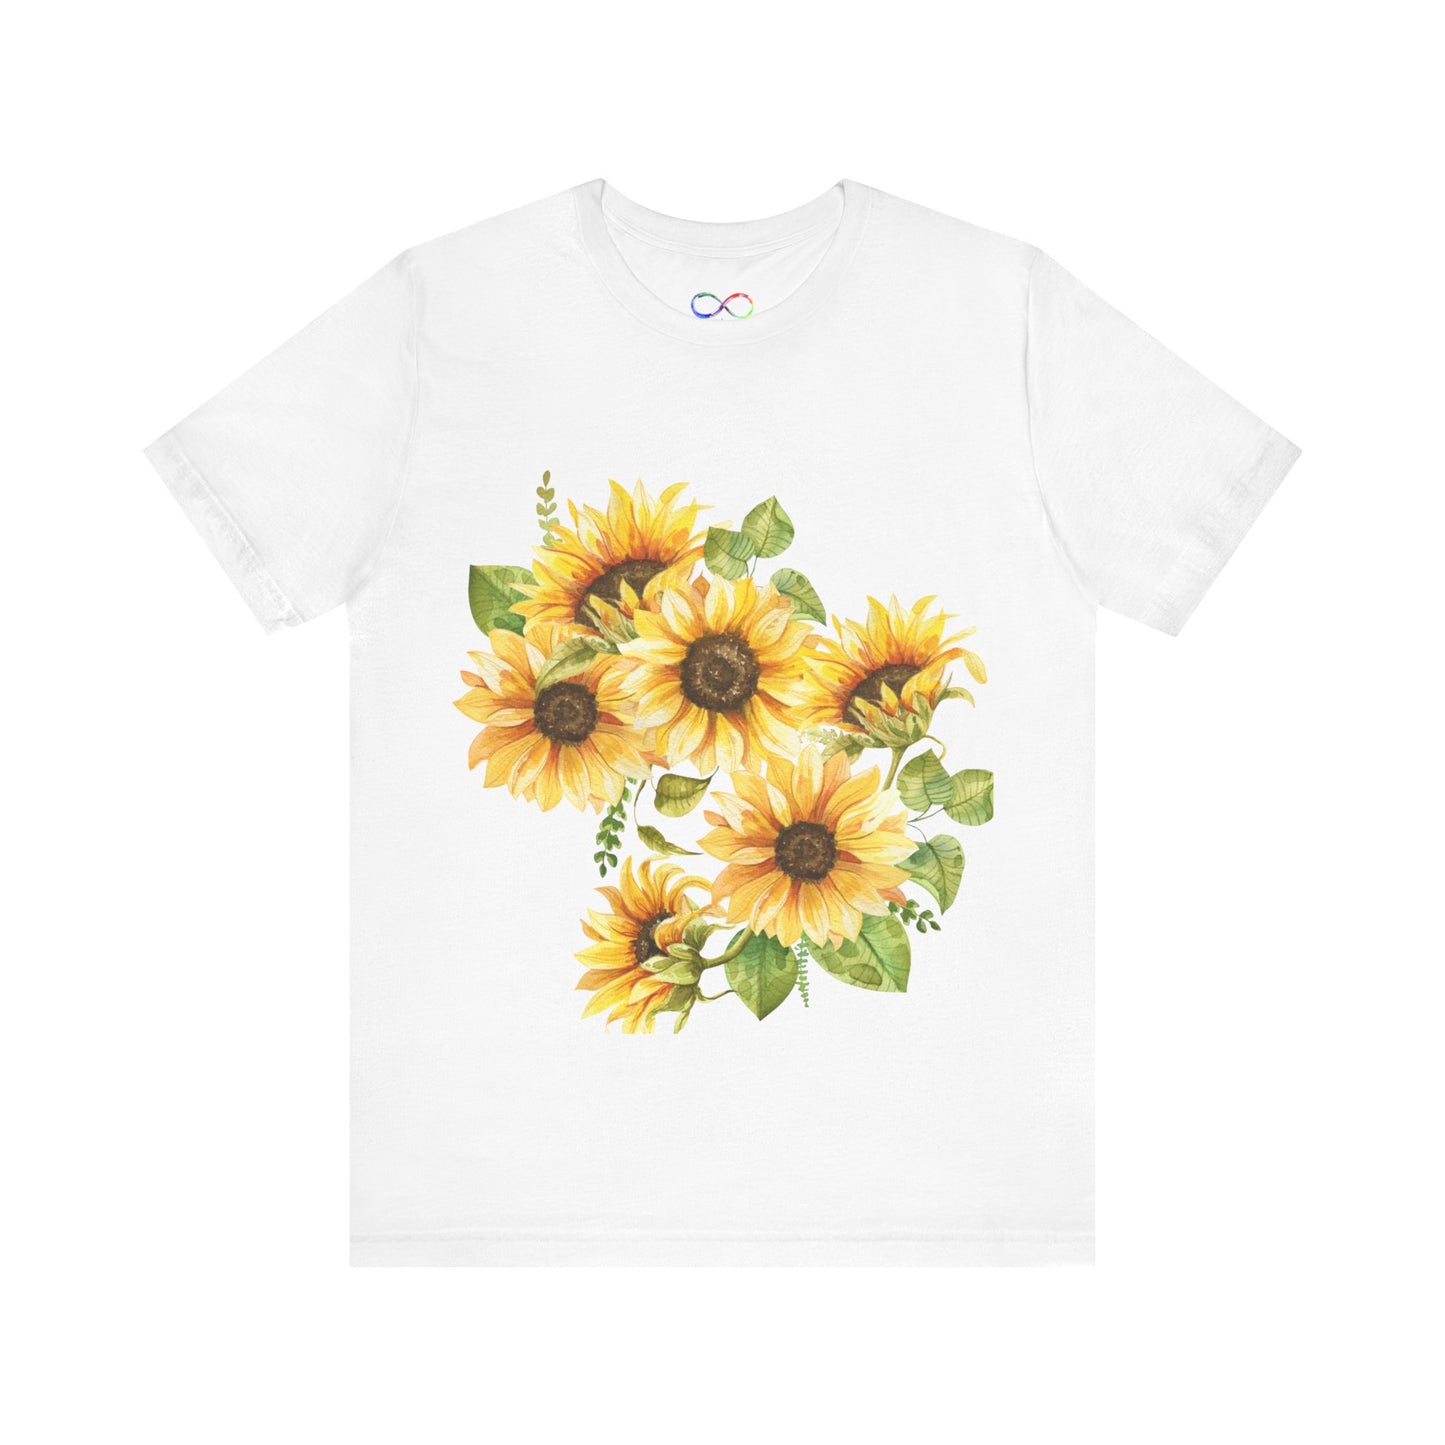 Sunflower t-shirts